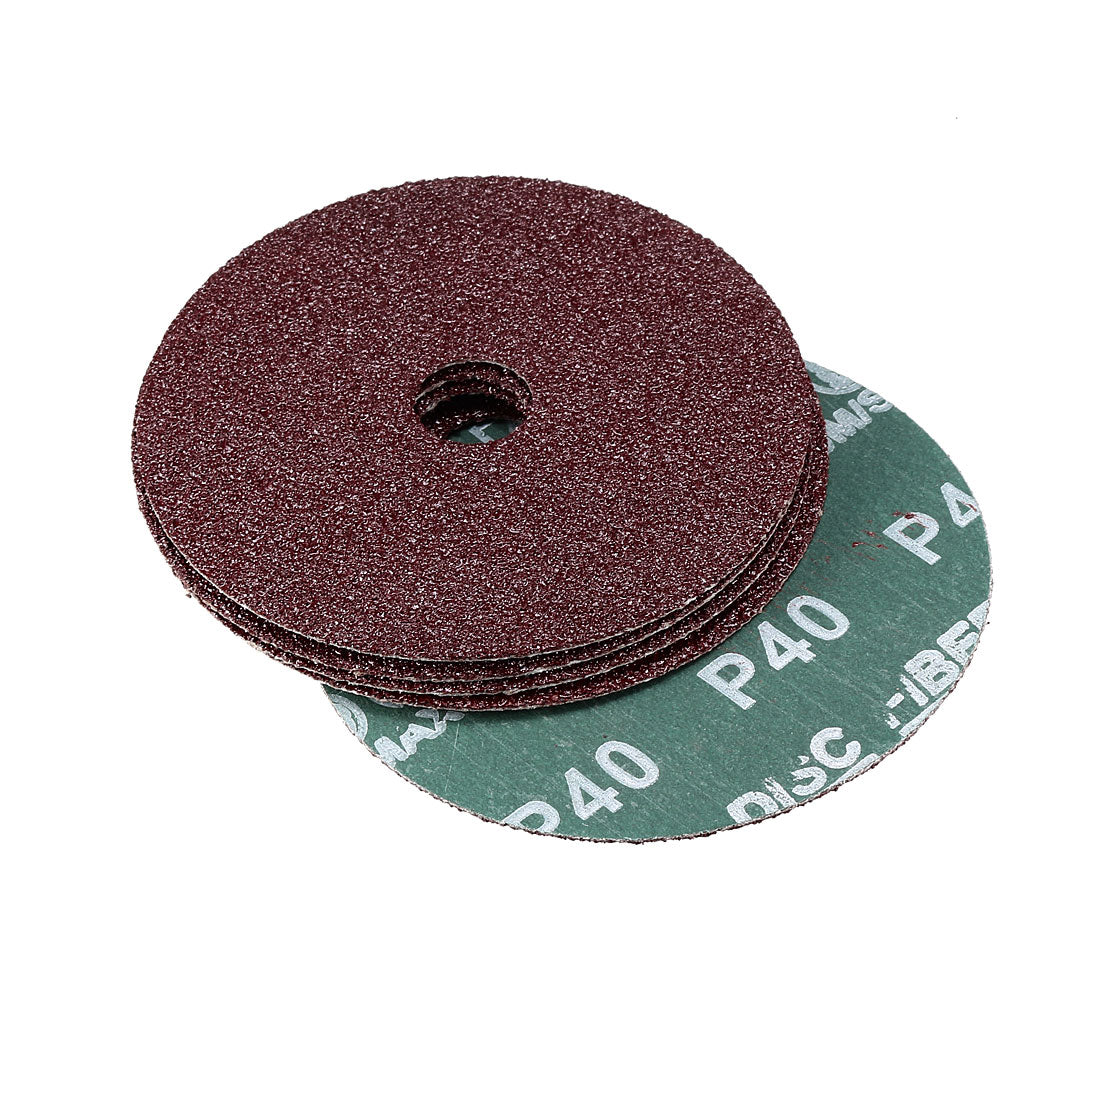 Uxcell Uxcell 4-Inch x 5/8-Inch Aluminum Oxide Resin Fiber Discs, Center Hole 120 Grit Sanding Grinding Discs, 5 Pcs